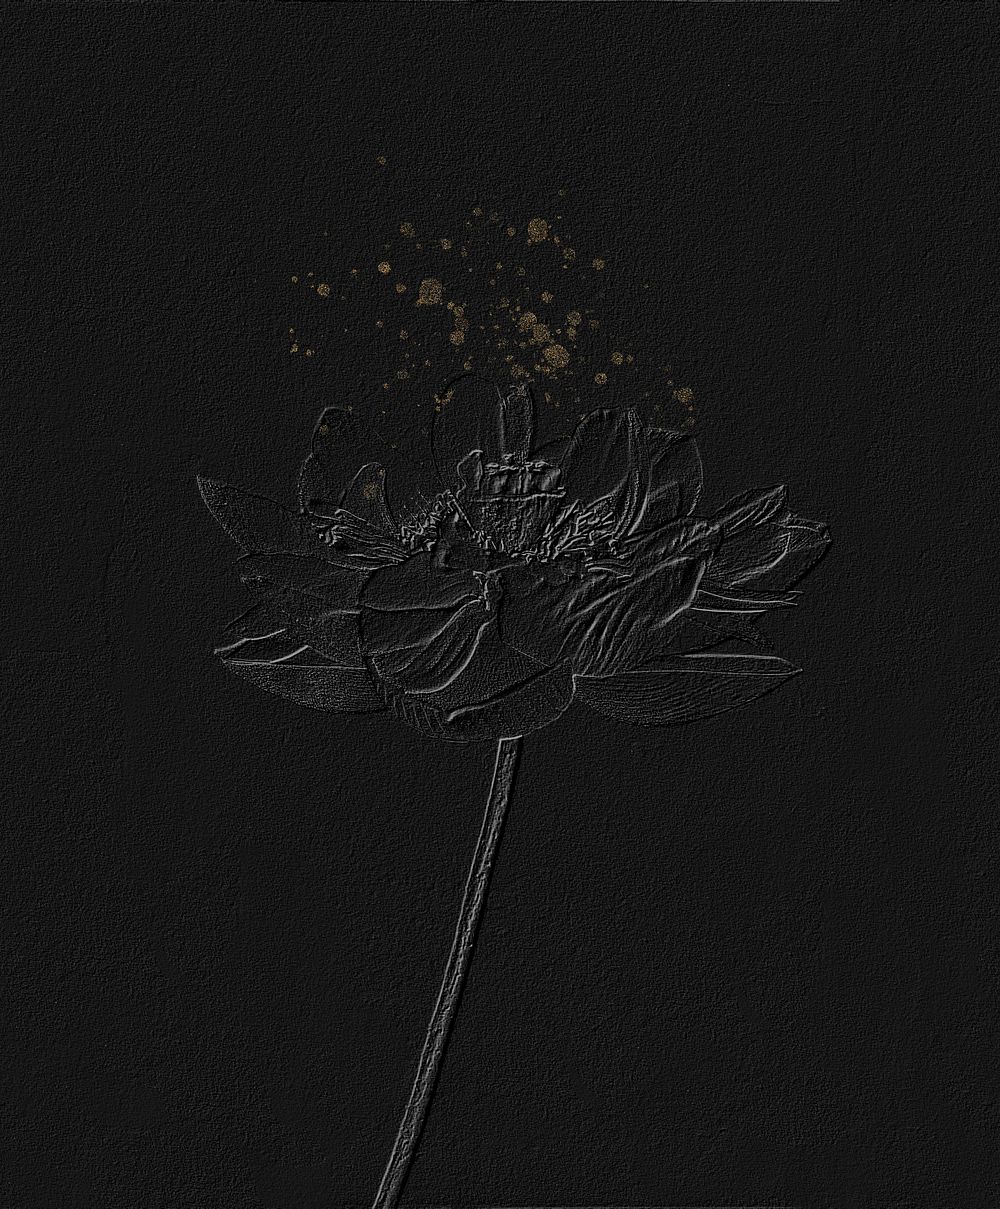 Lotus flowers artwork design, remix from original photography by Ogawa Kazumasa.